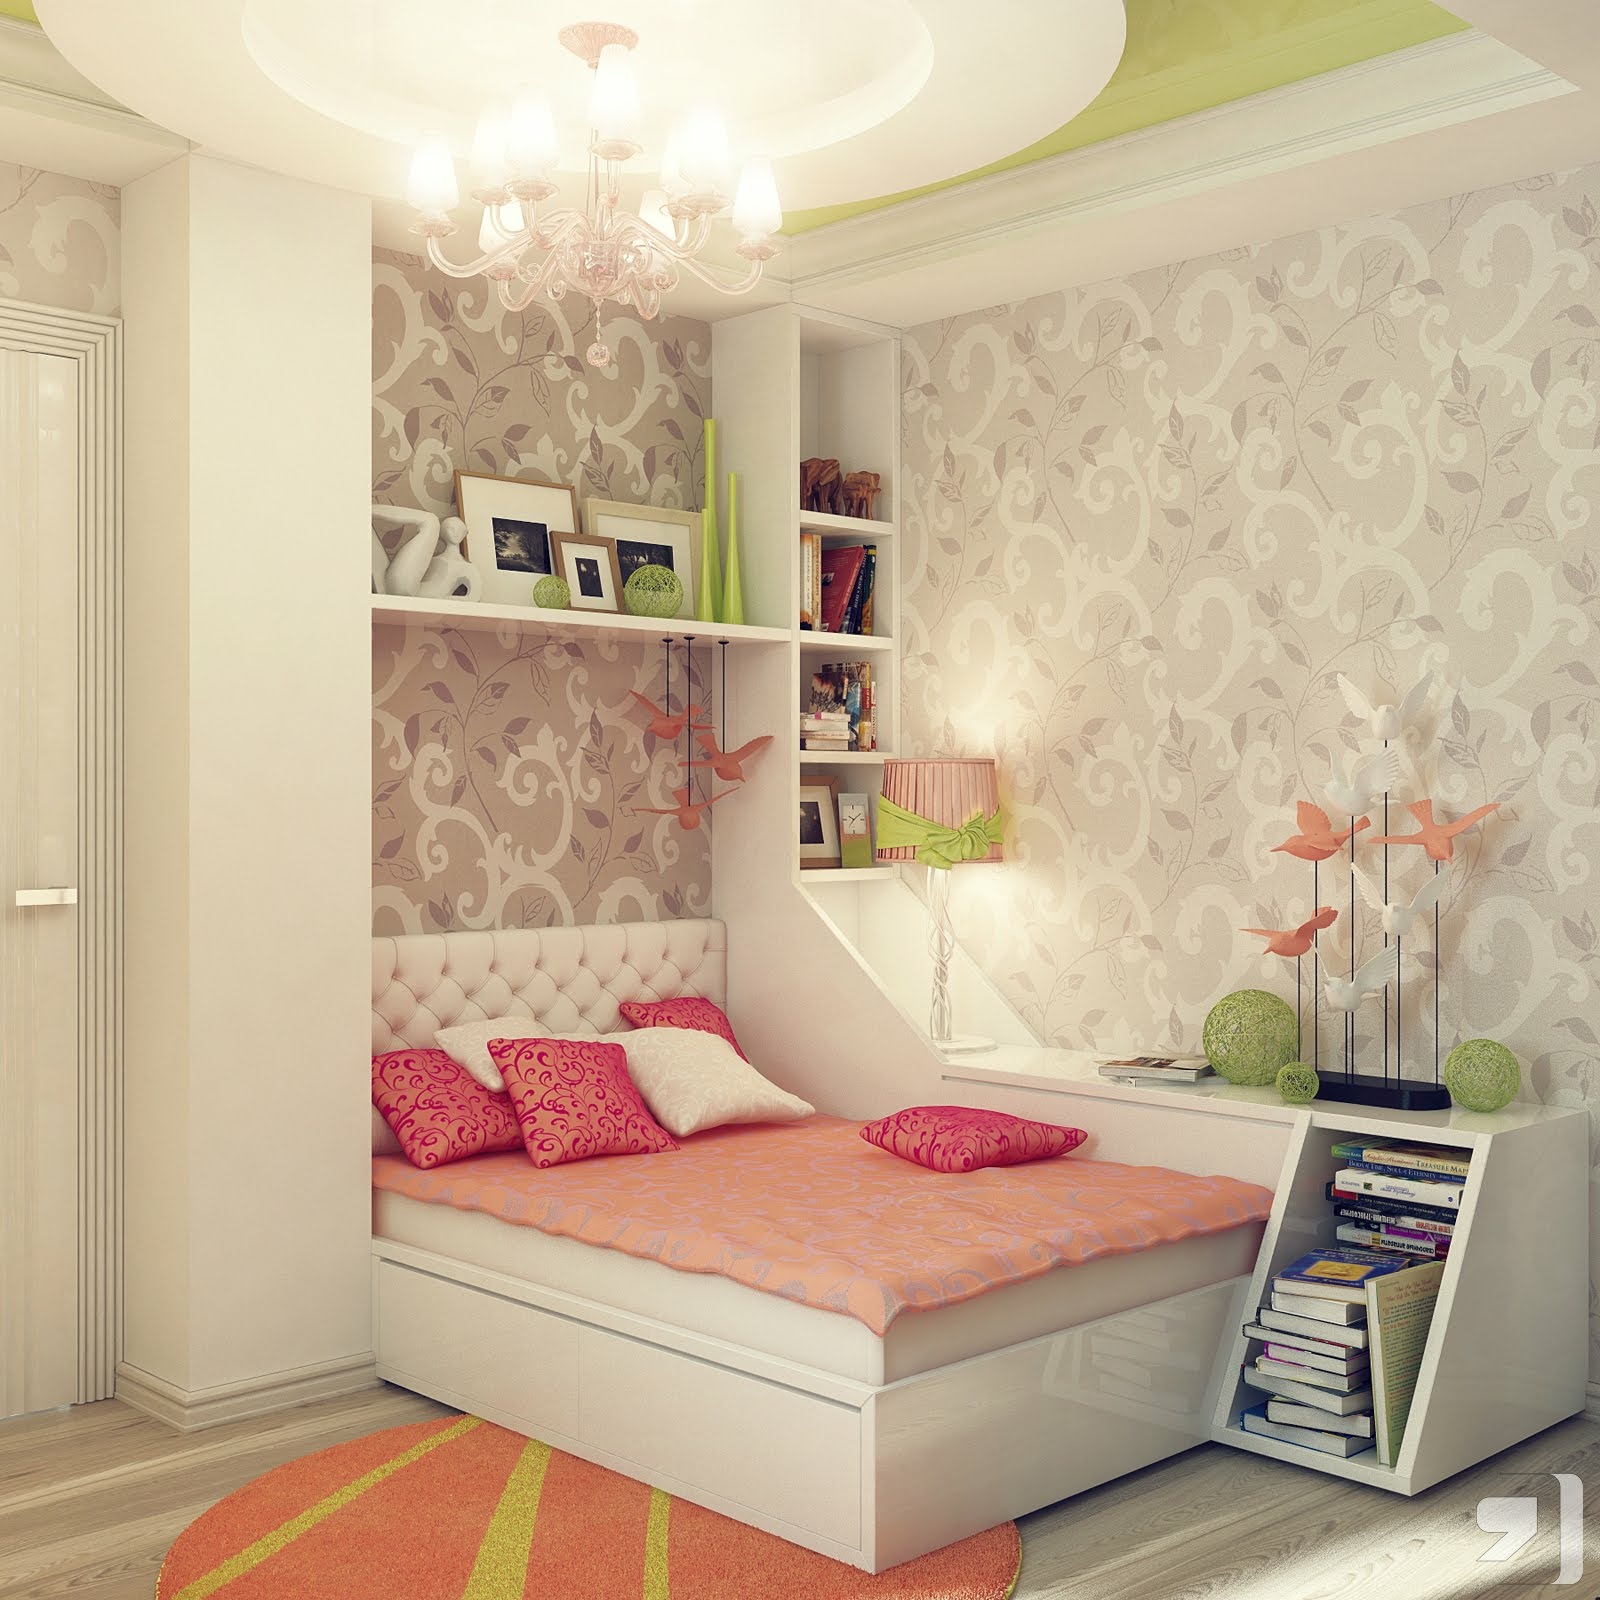 1b-Peach-green-gray-girls-bedroom-decor